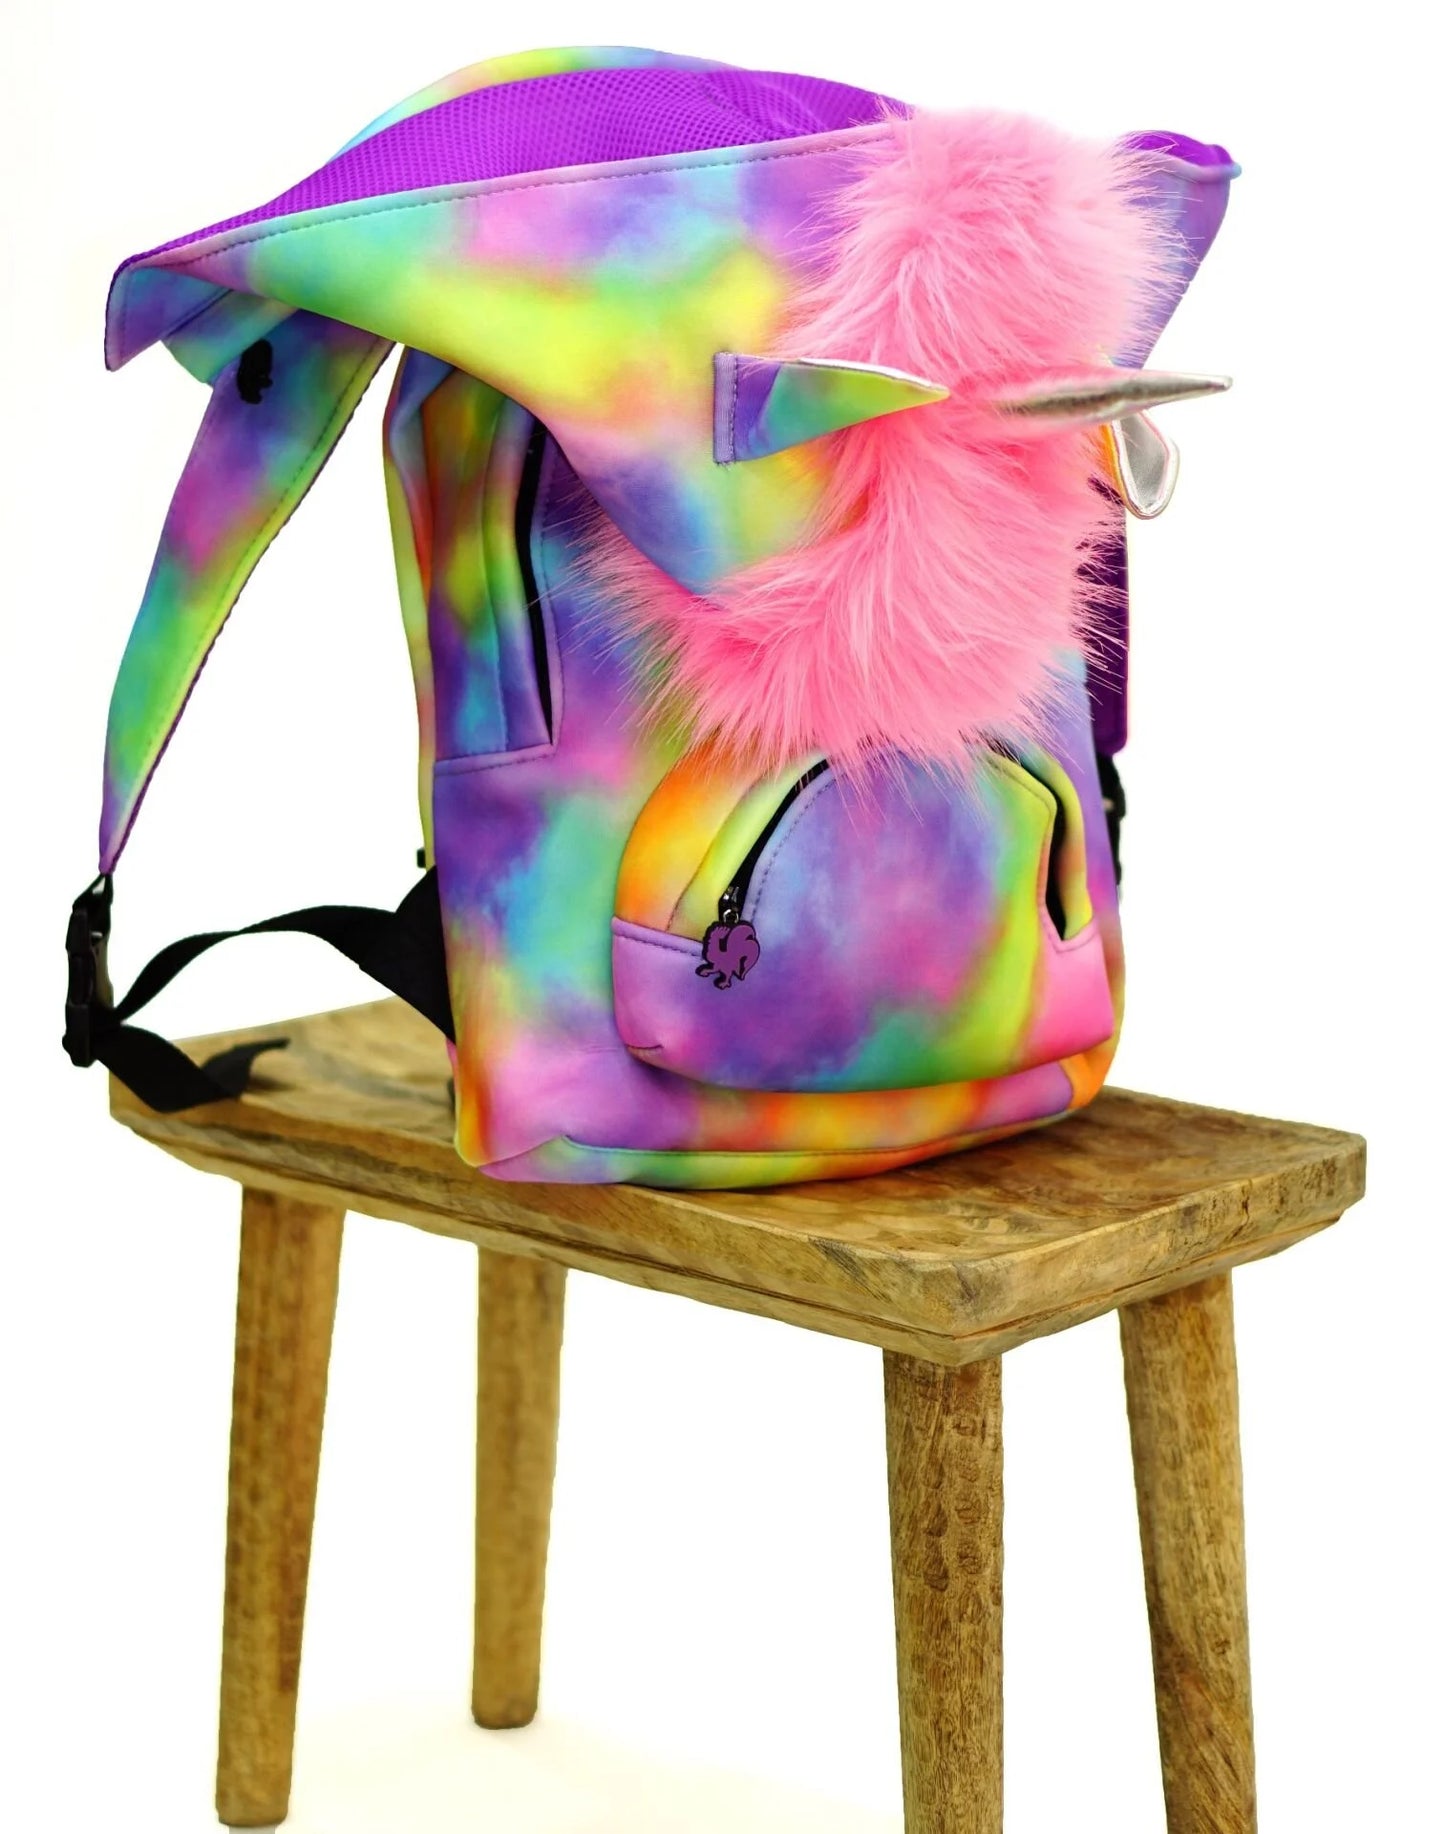 Morikukko Kids Unicorn Detachable Hooded Backpack (For Kids)